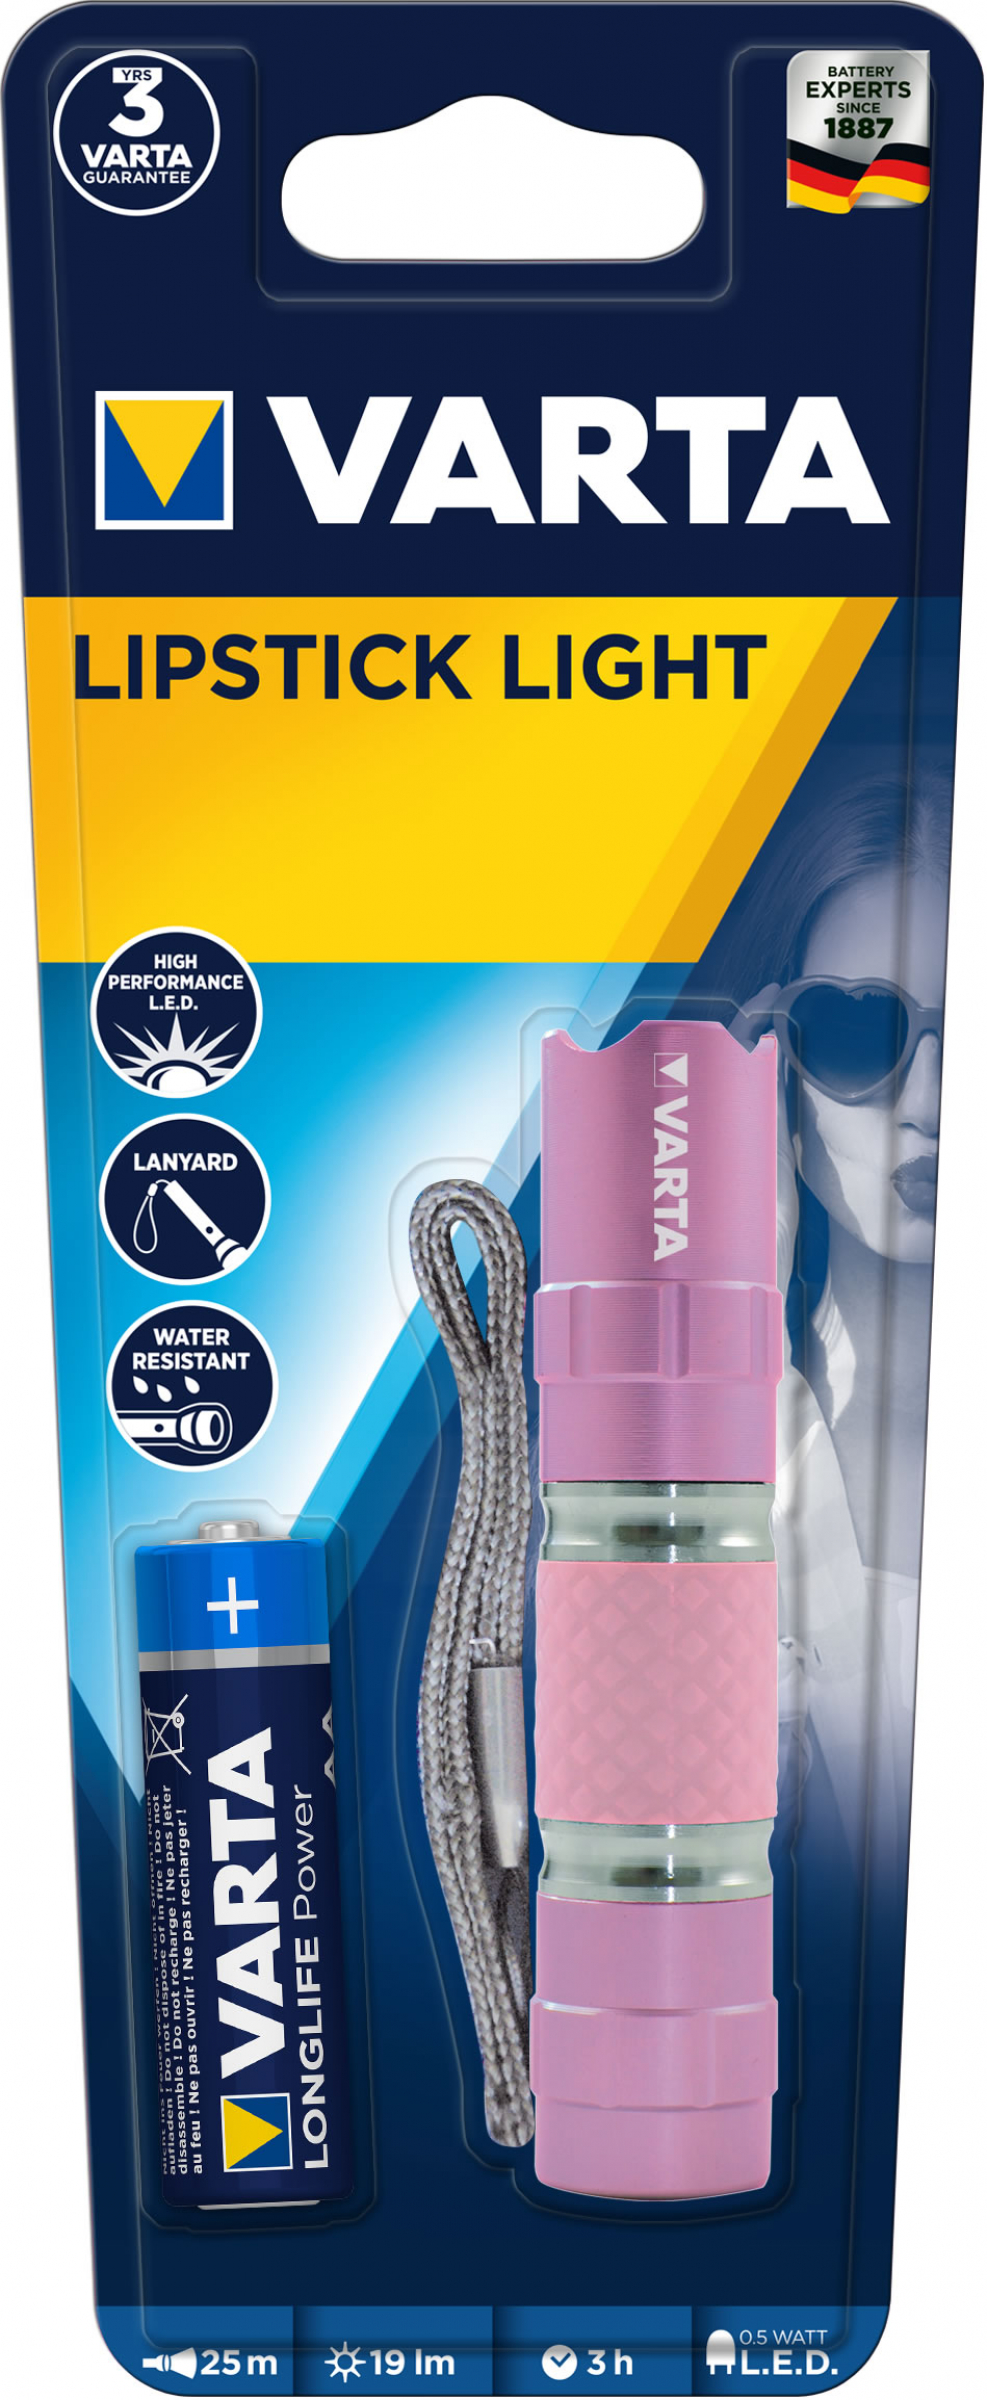 VOLTRONIC SHOP | Varta Light Lipstick Taschenlampe